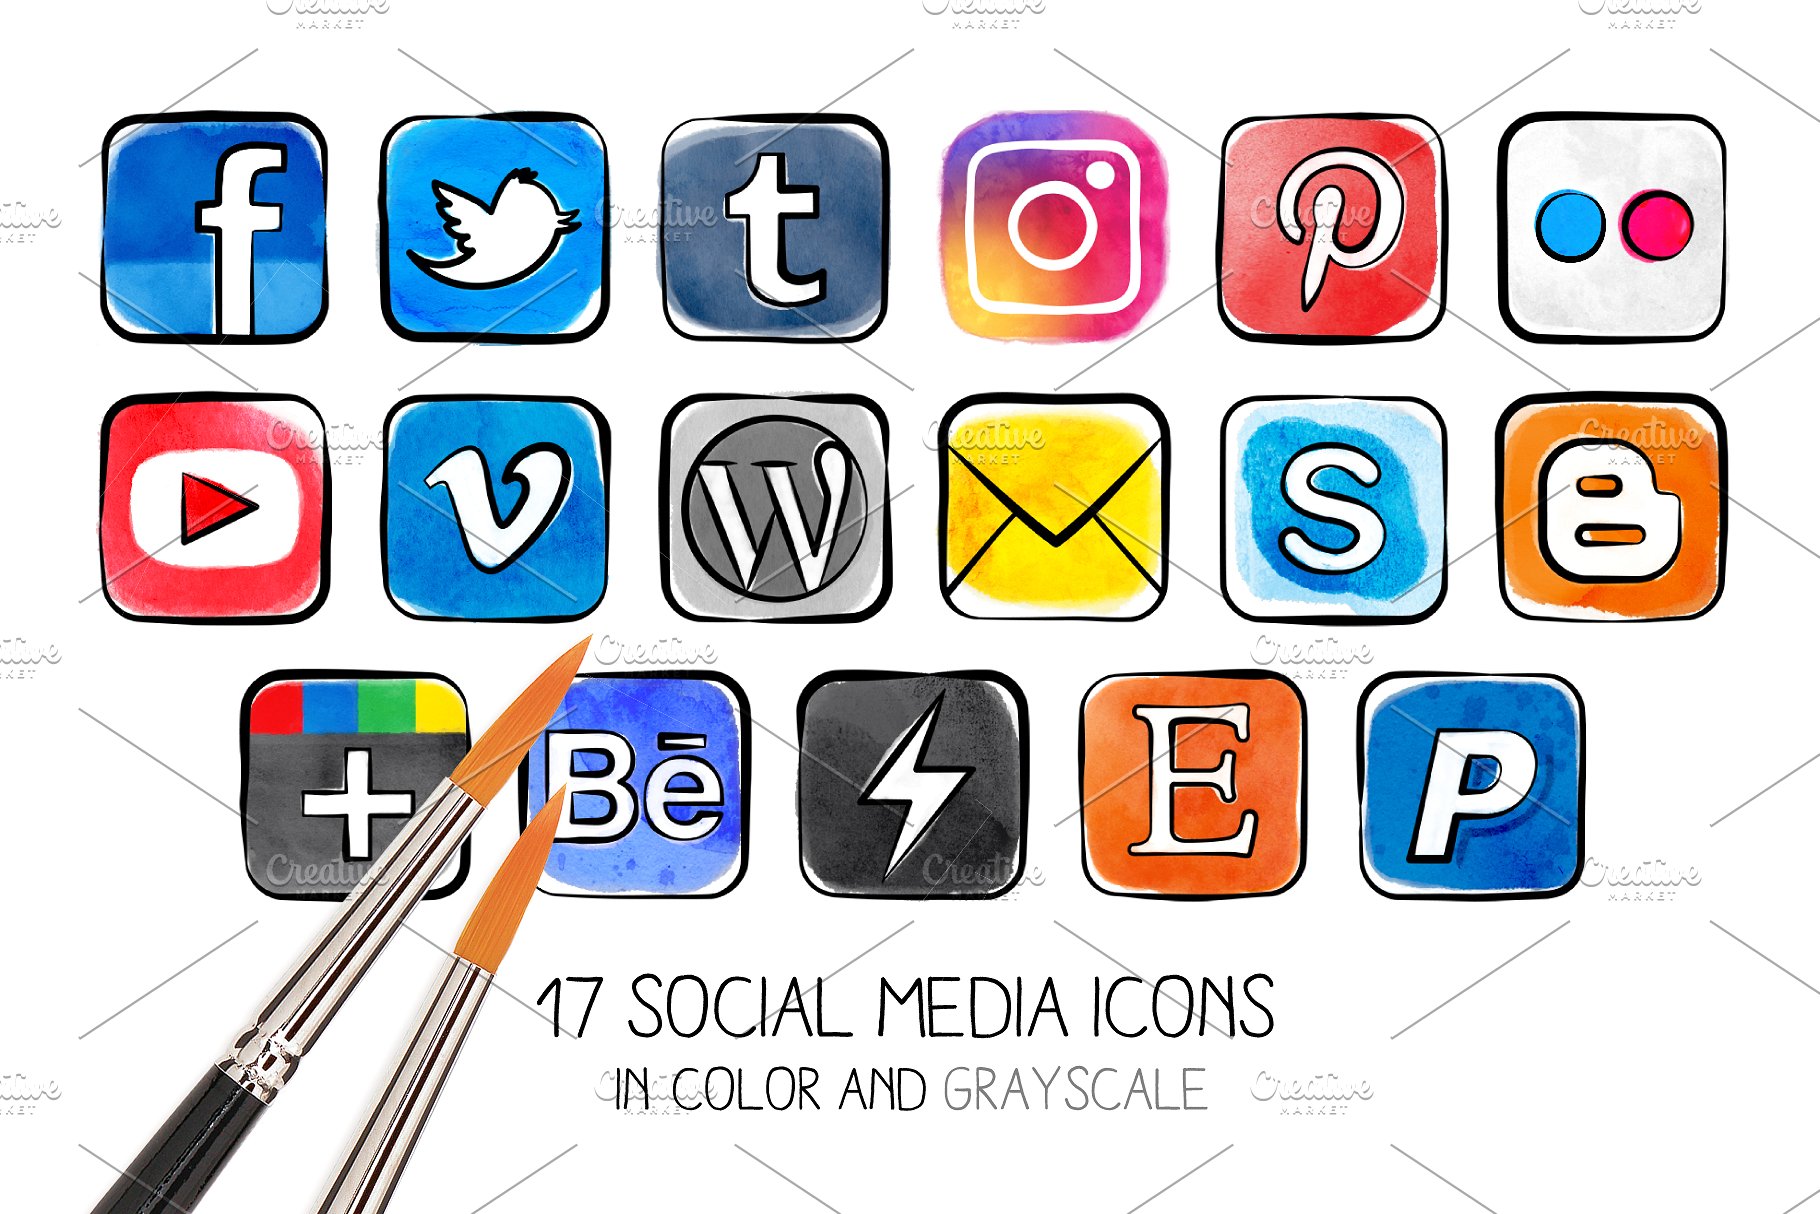 17种水彩效果社交媒体图标  Watercolor effect social media icons插图